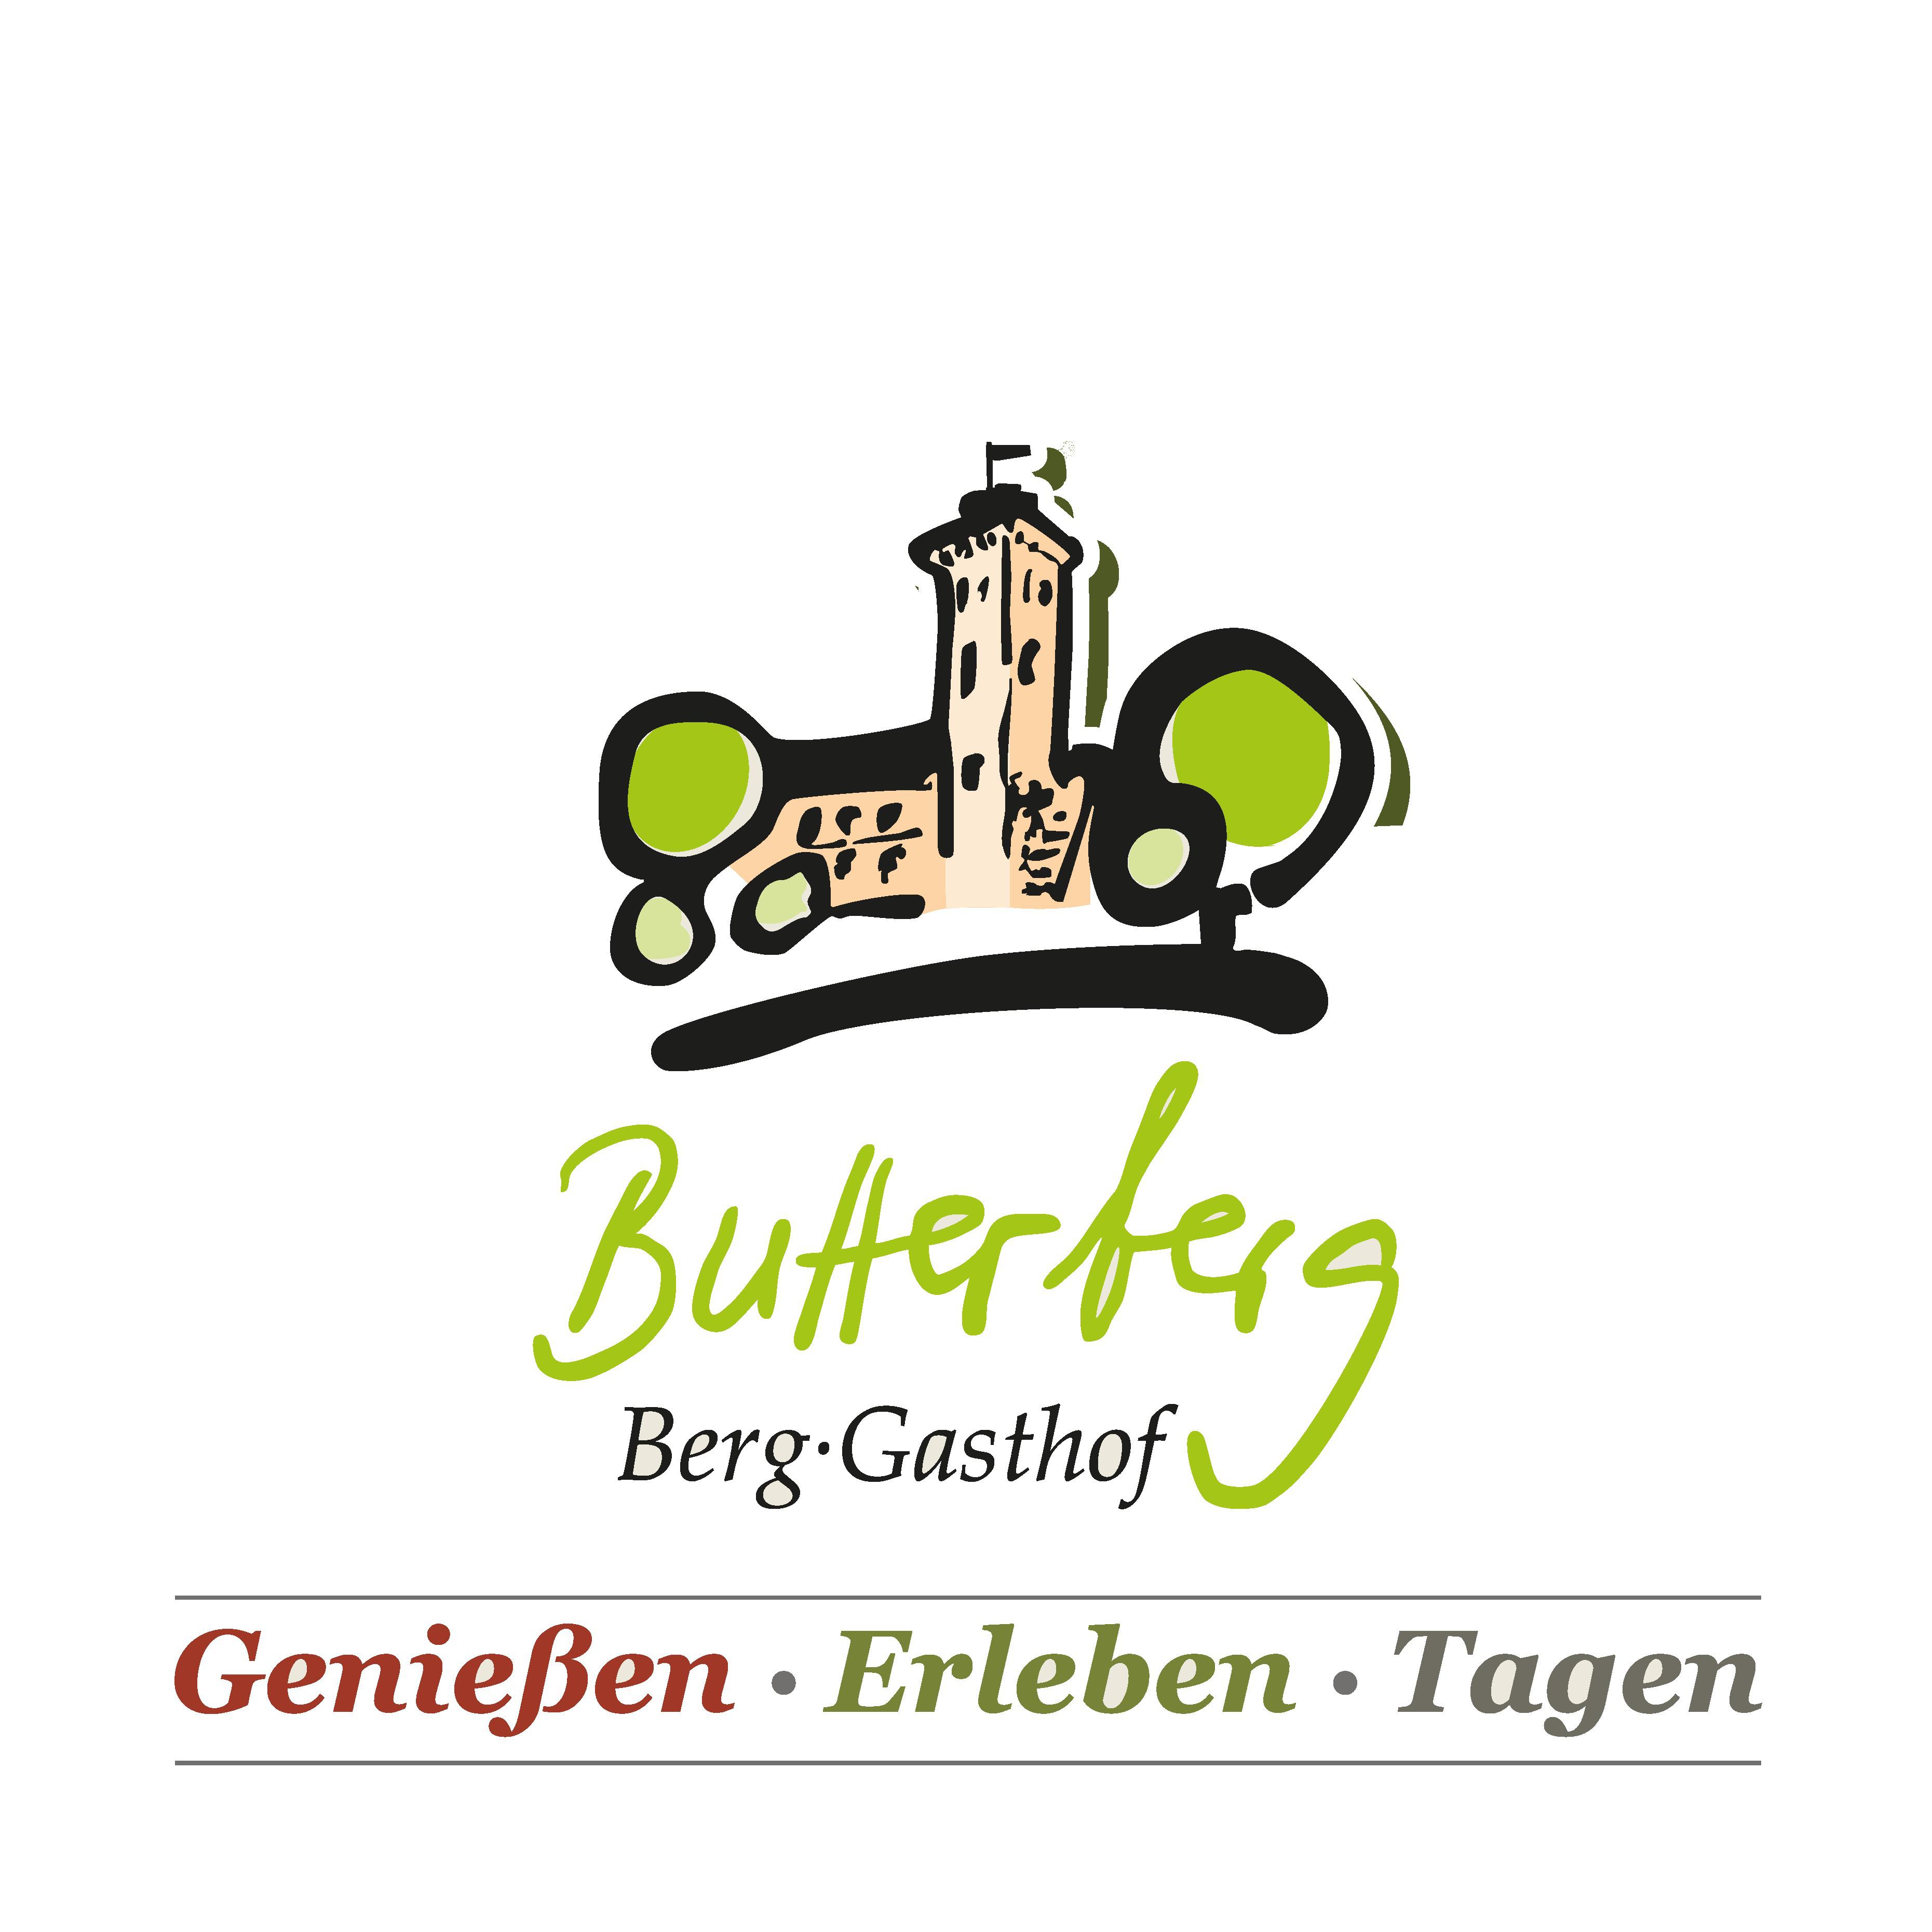 Berggasthof Butterberg in Bischofswerda - Logo